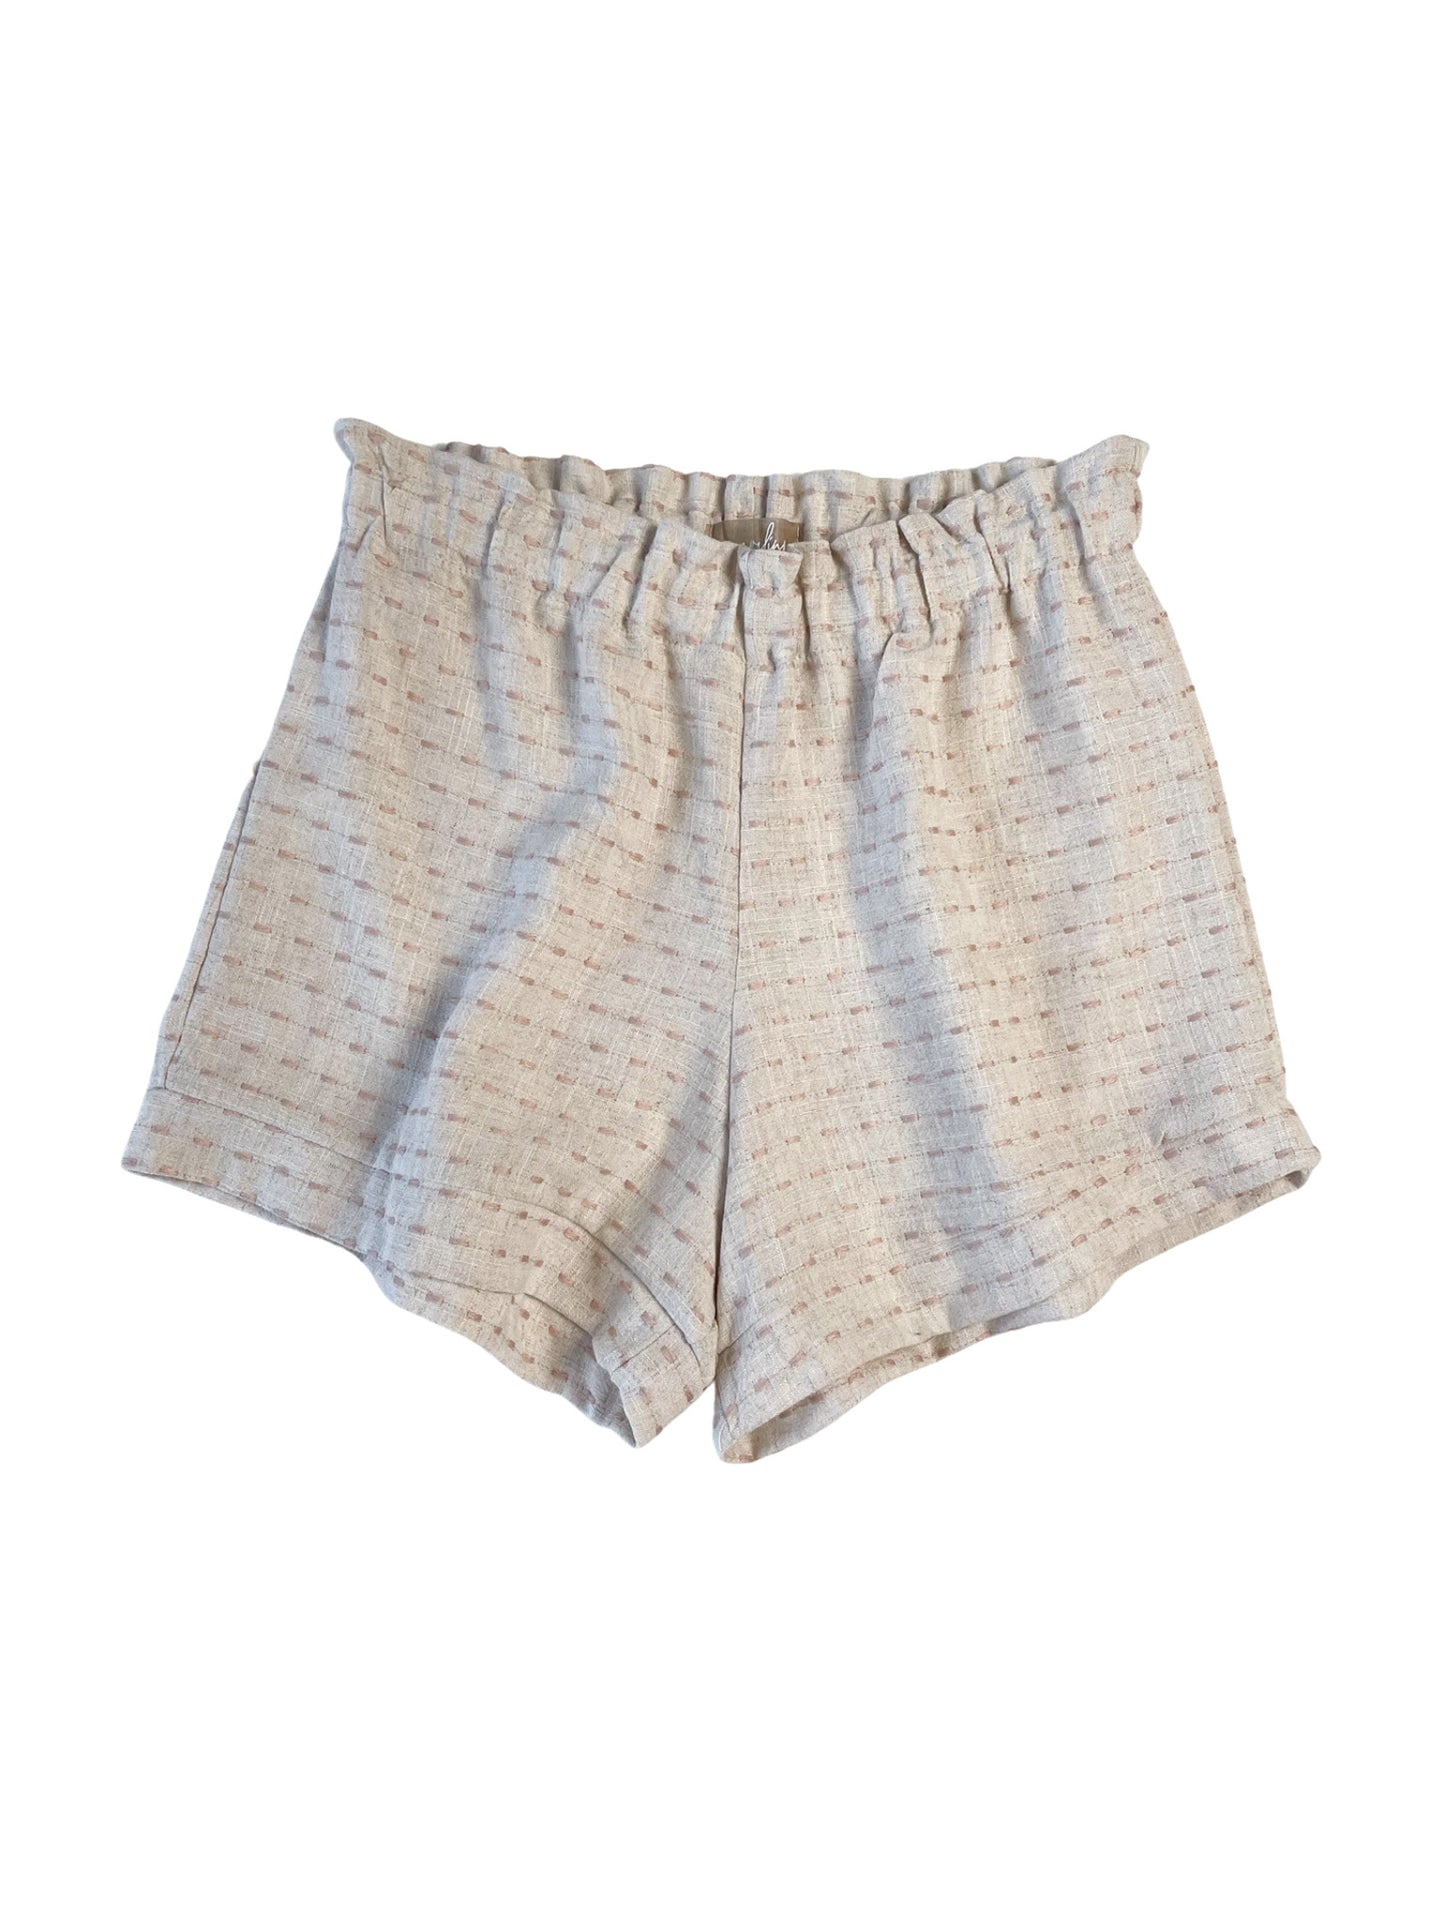 Linen ruffle shorts / rose stripes